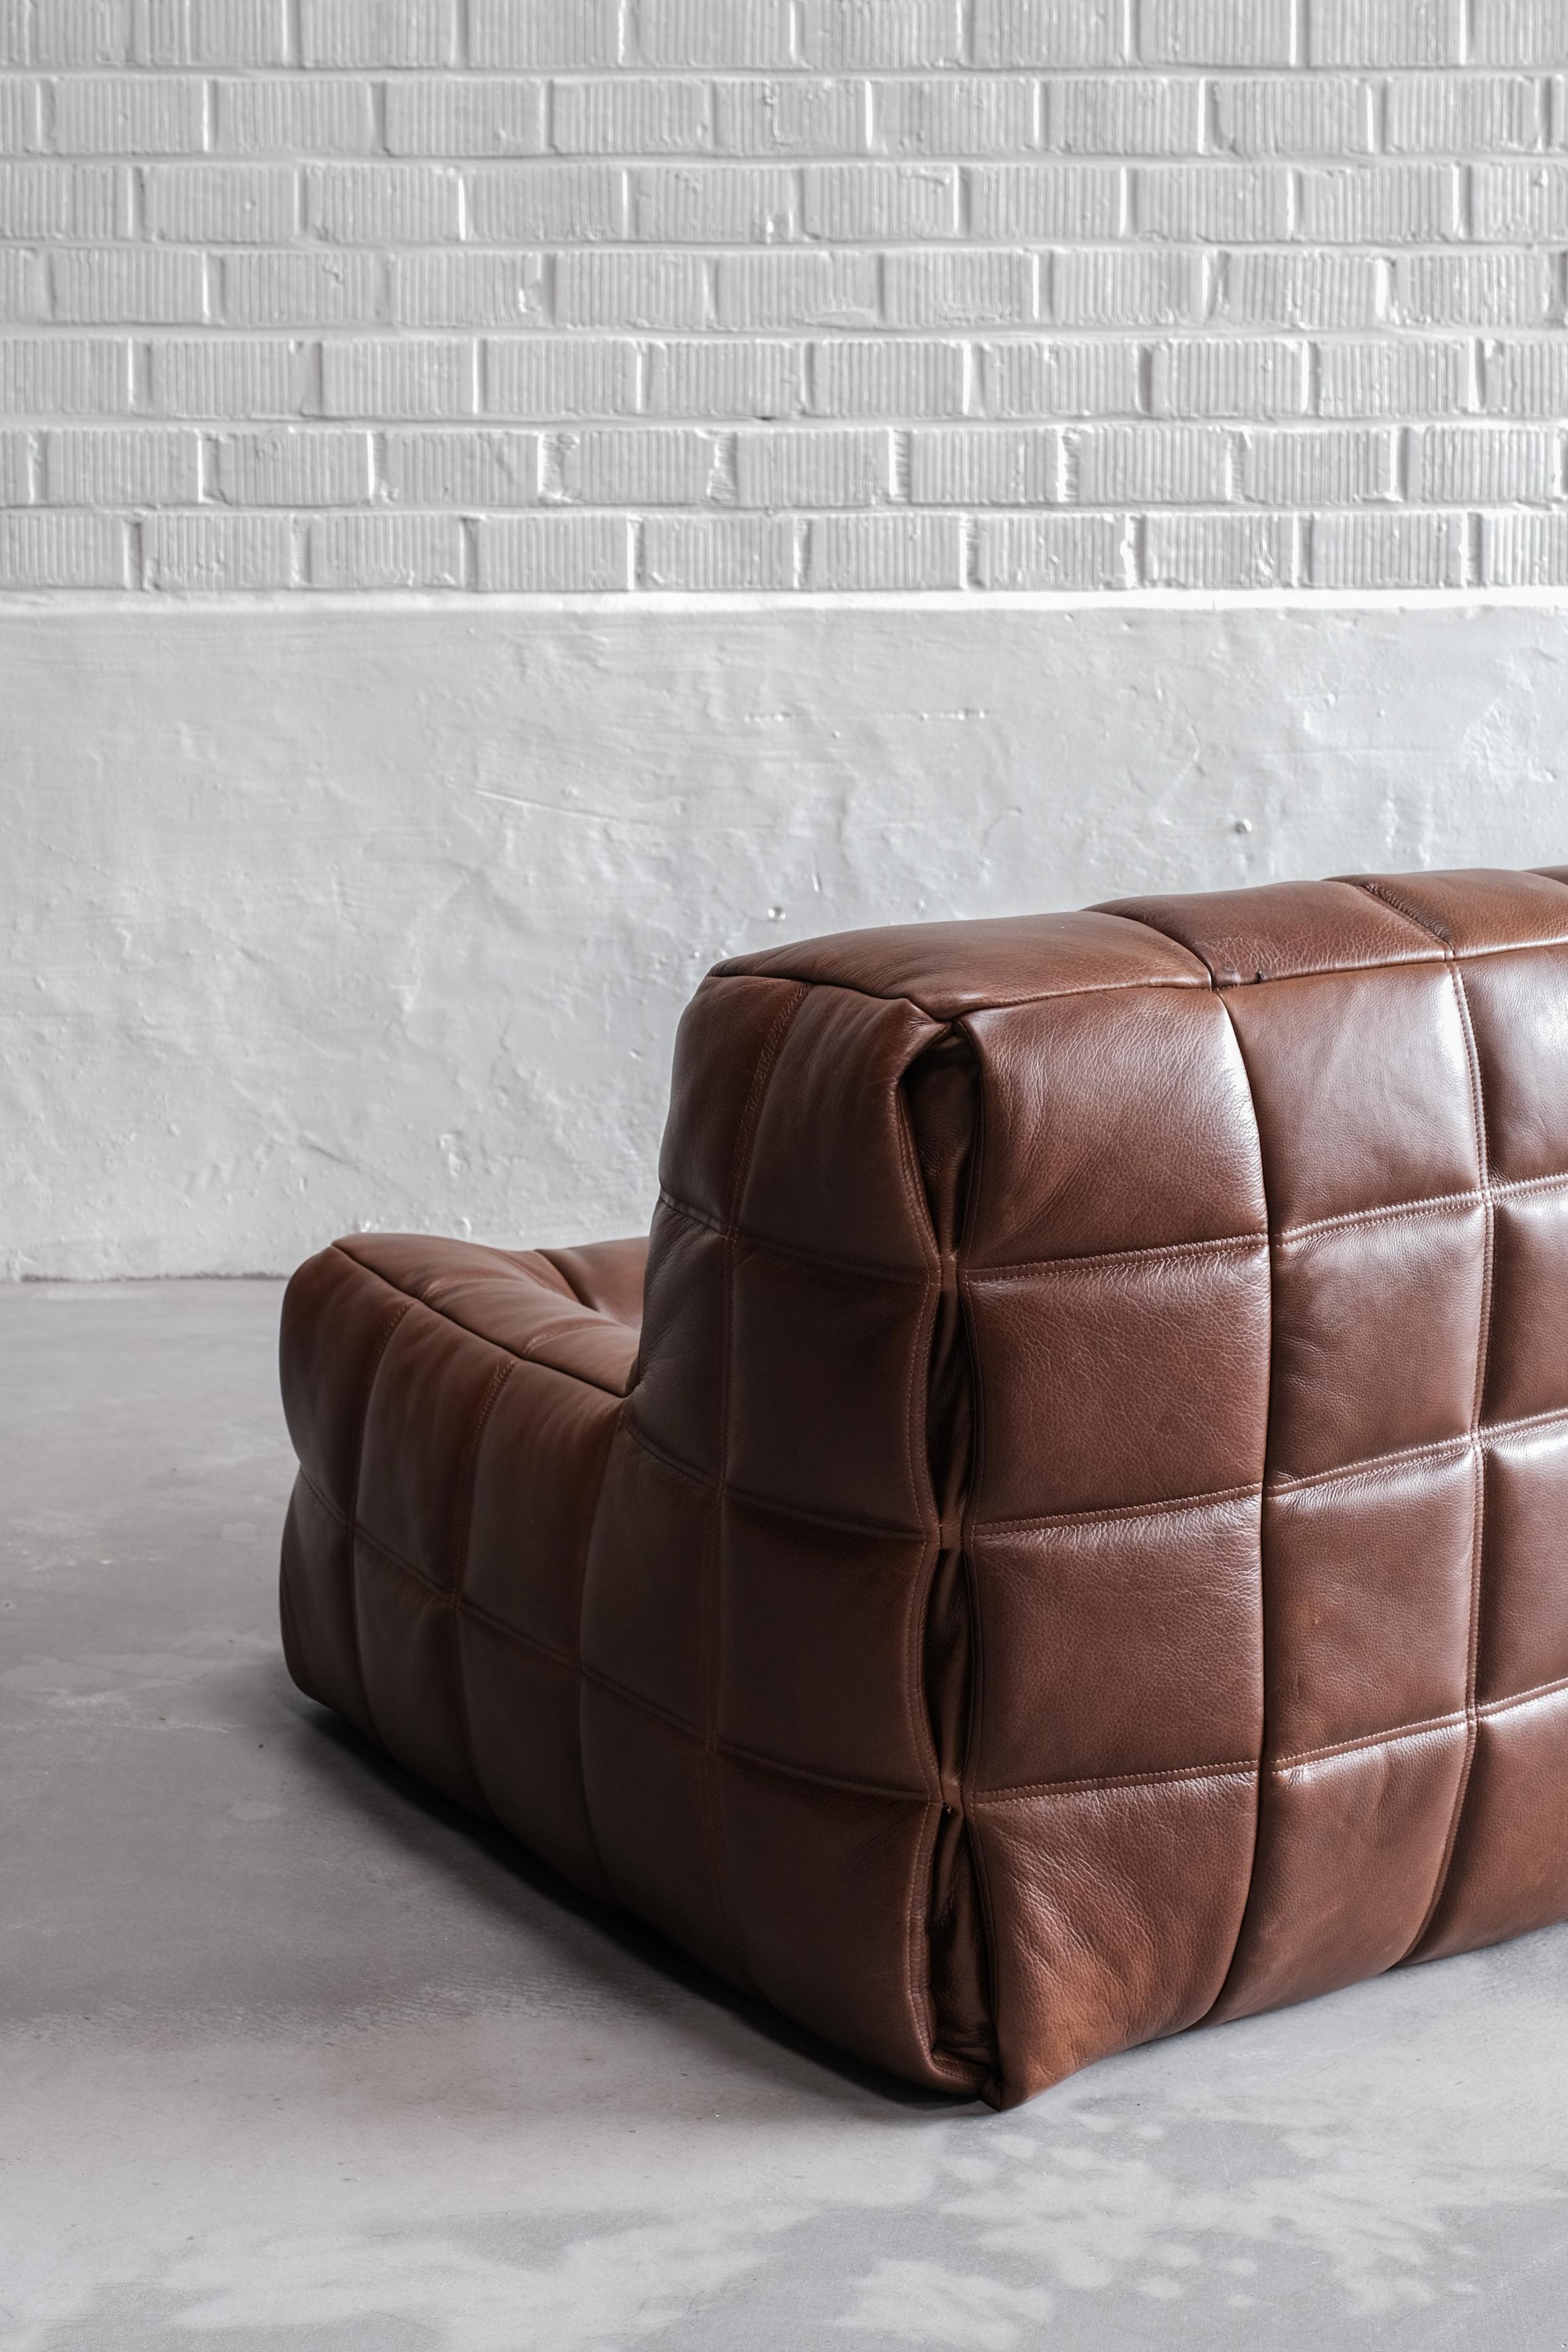 Kashima 3 seater leather sofa designed by Michel Ducaroy for Ligne Roset 1970 3